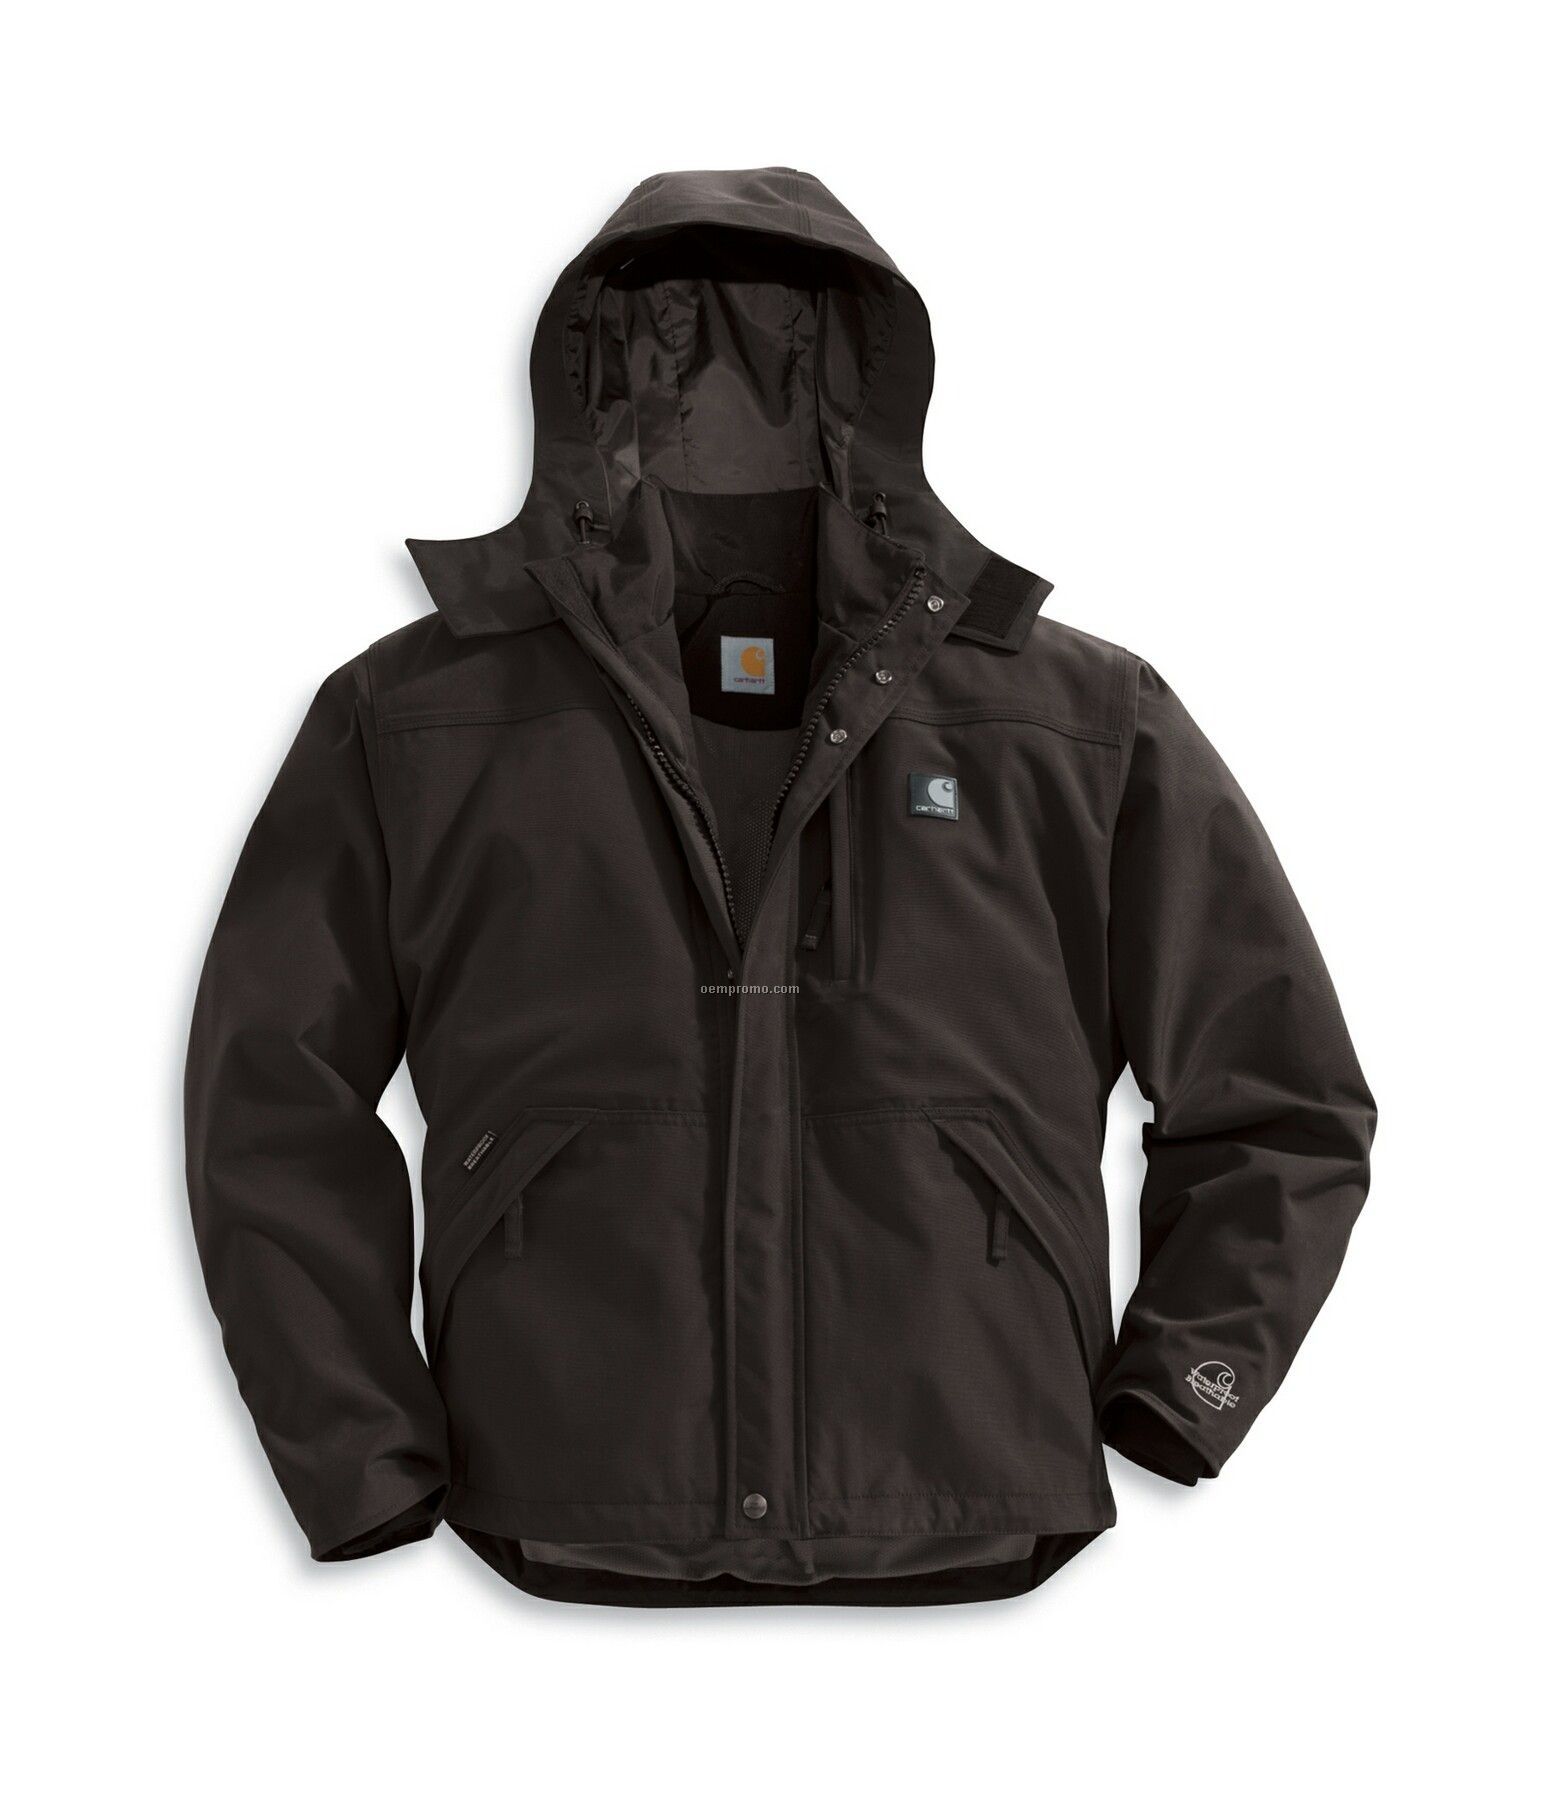 Carhartt Men's Waterproof Breathable Jacket W/ Left Chest Pocket